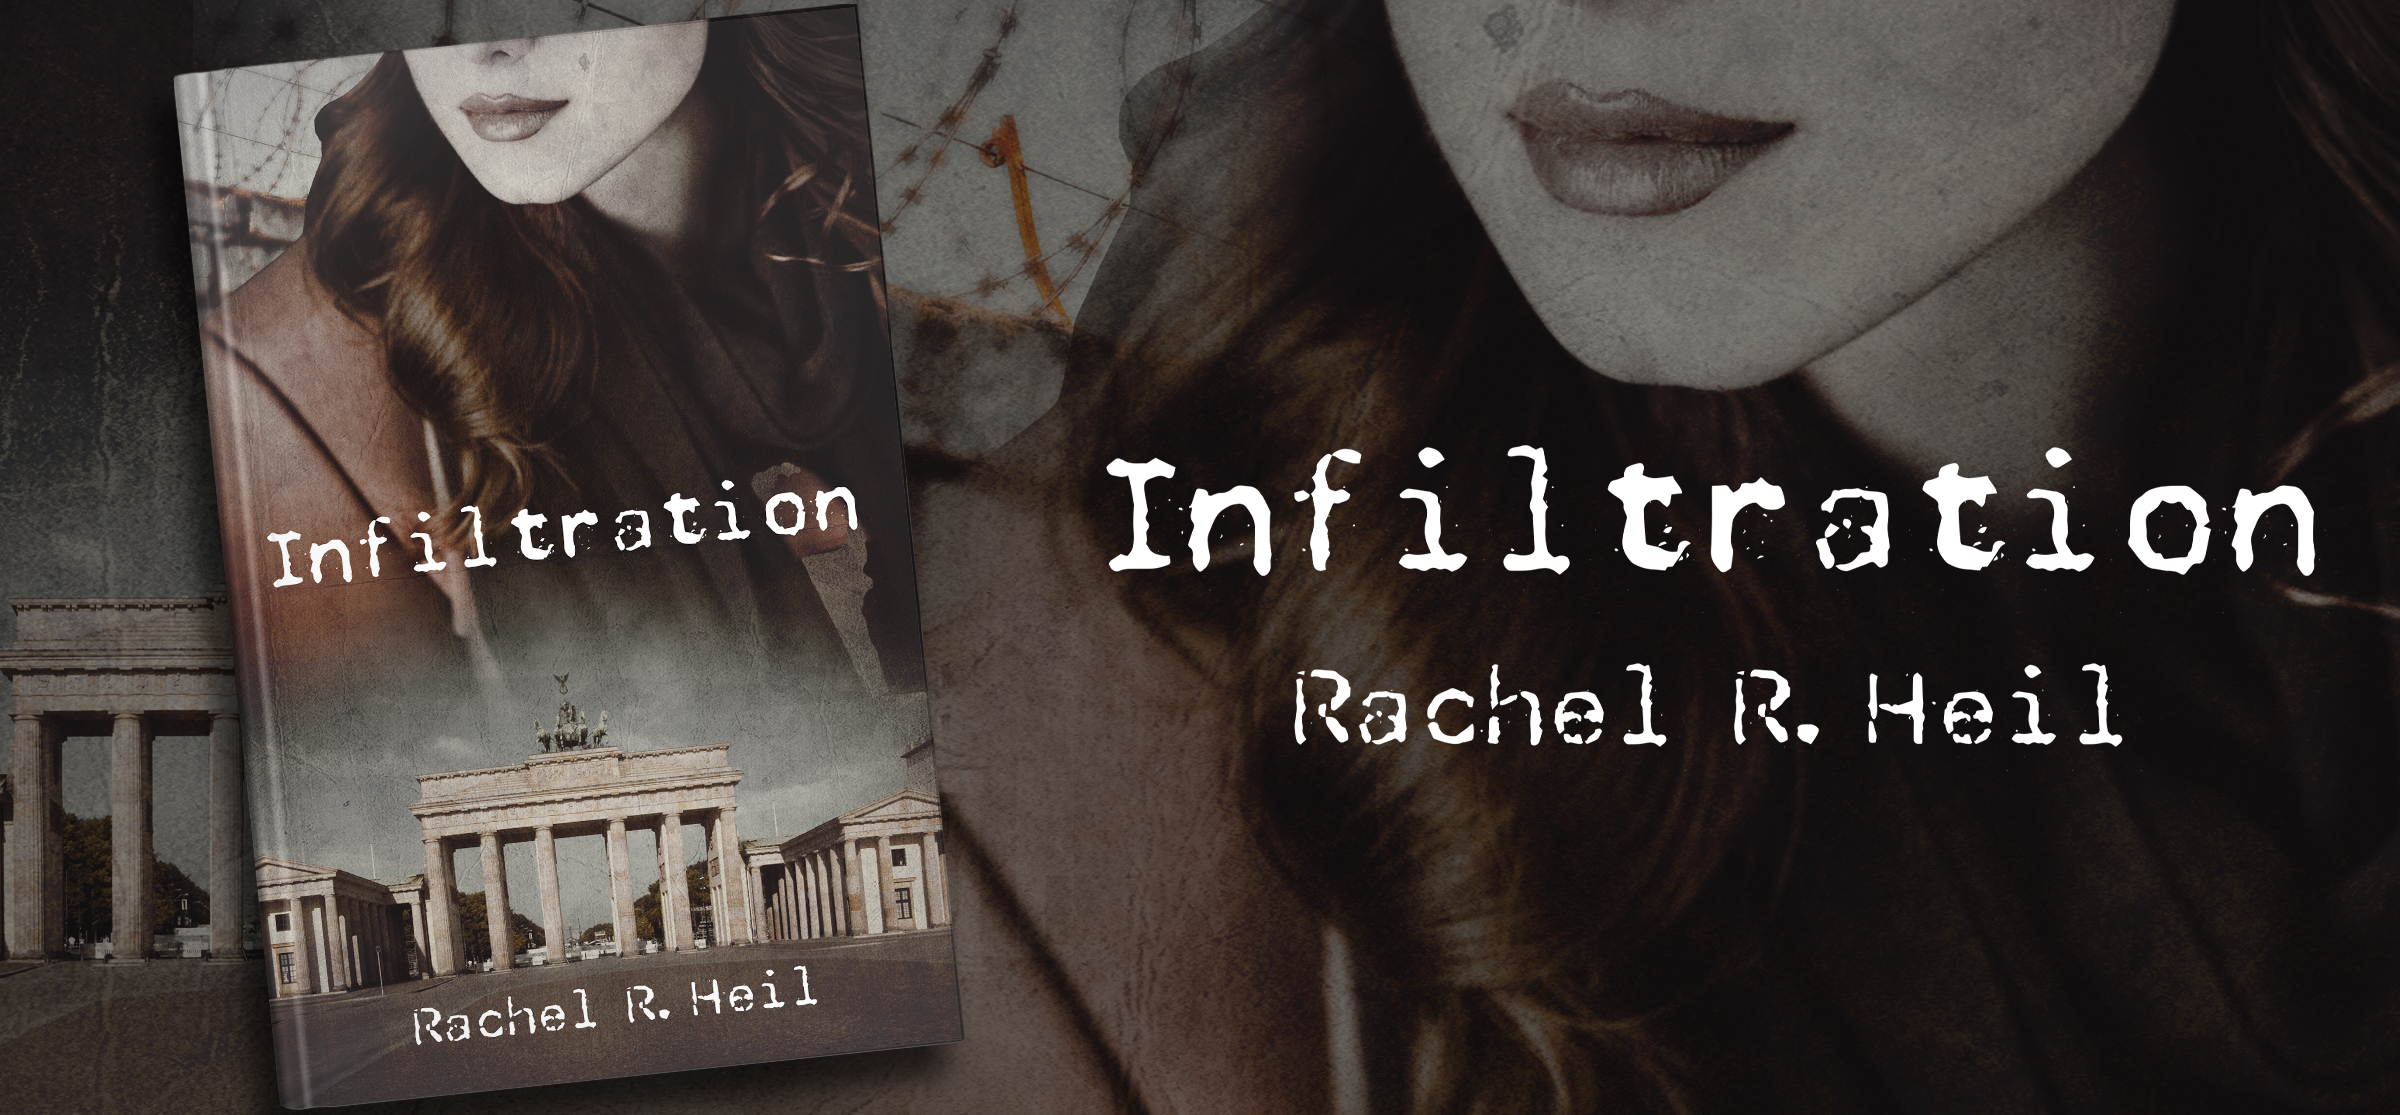 Infiltration by Rachel R. Heil